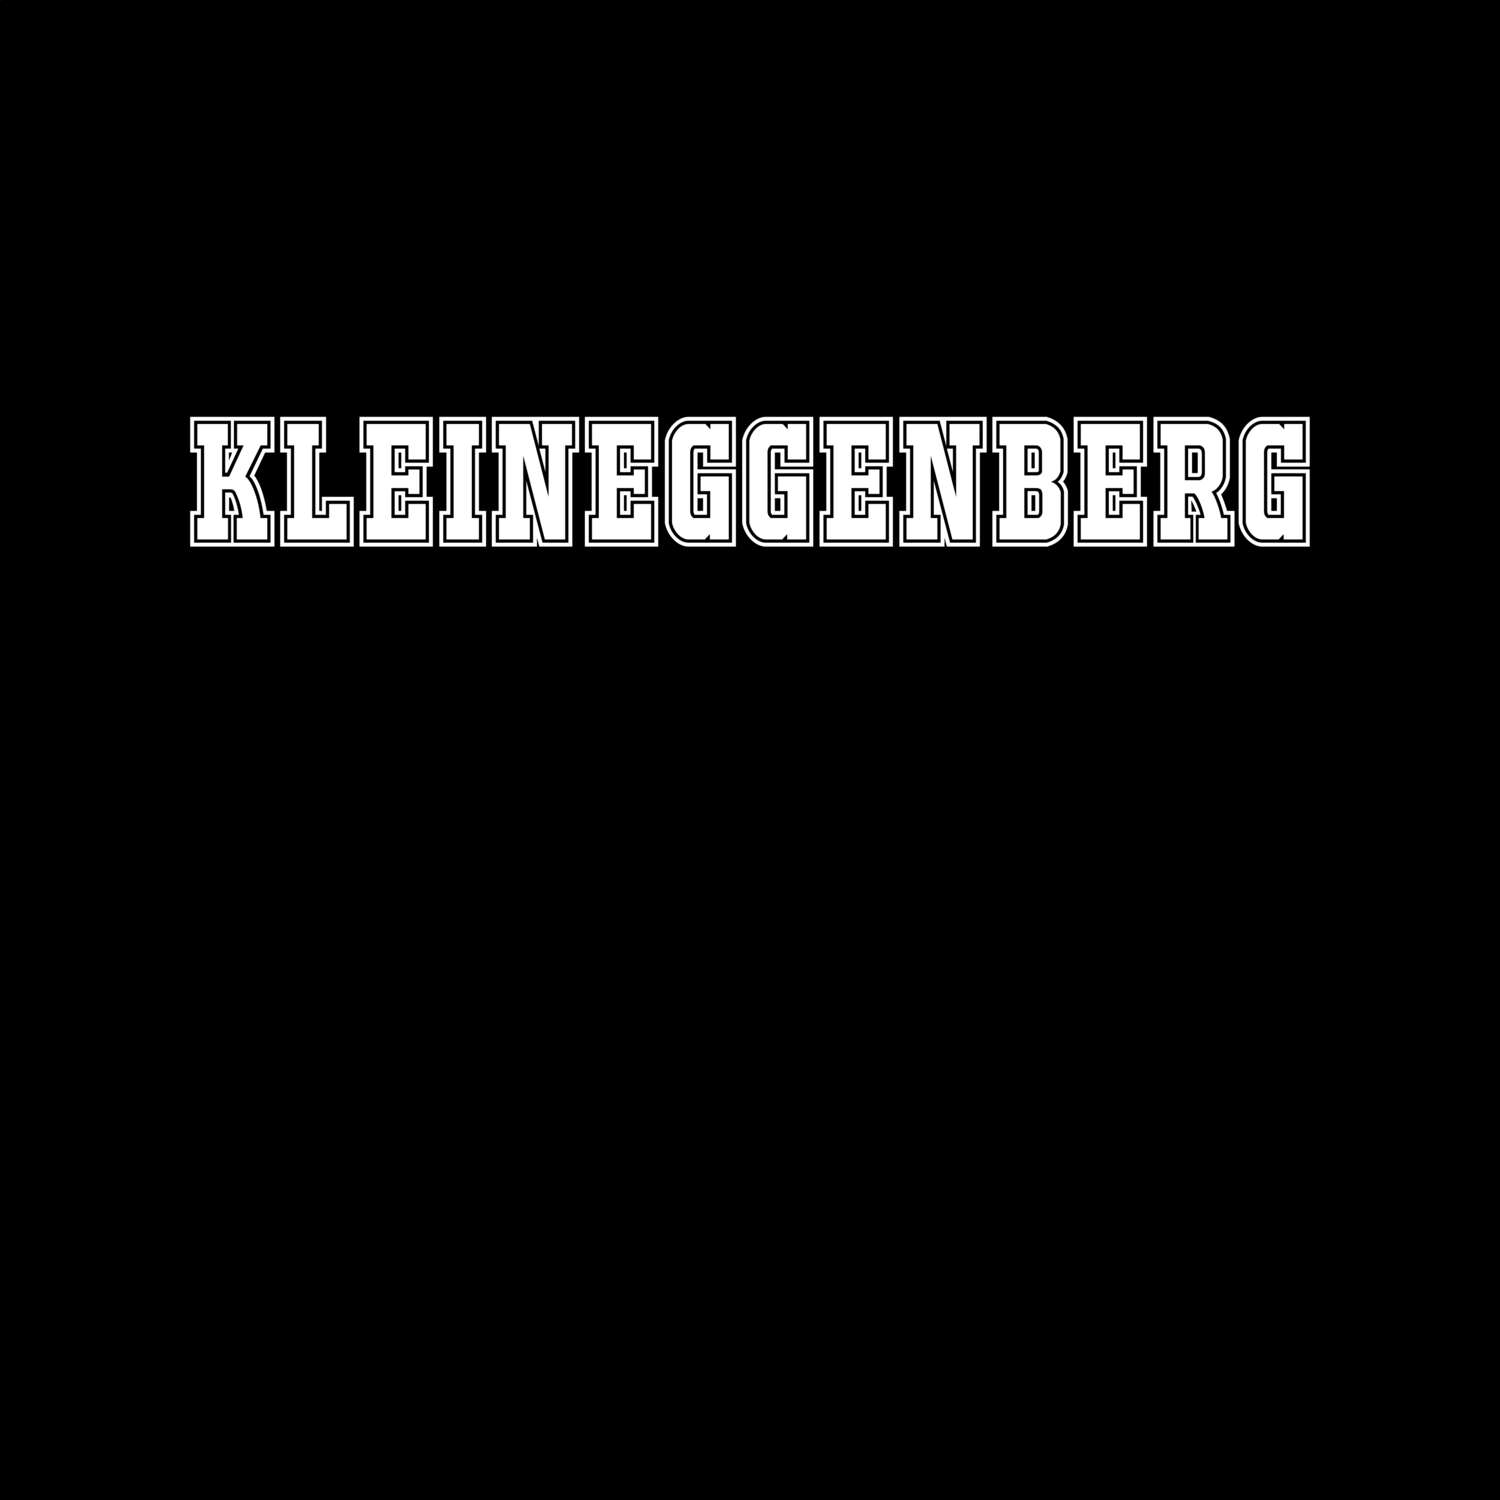 Kleineggenberg T-Shirt »Classic«